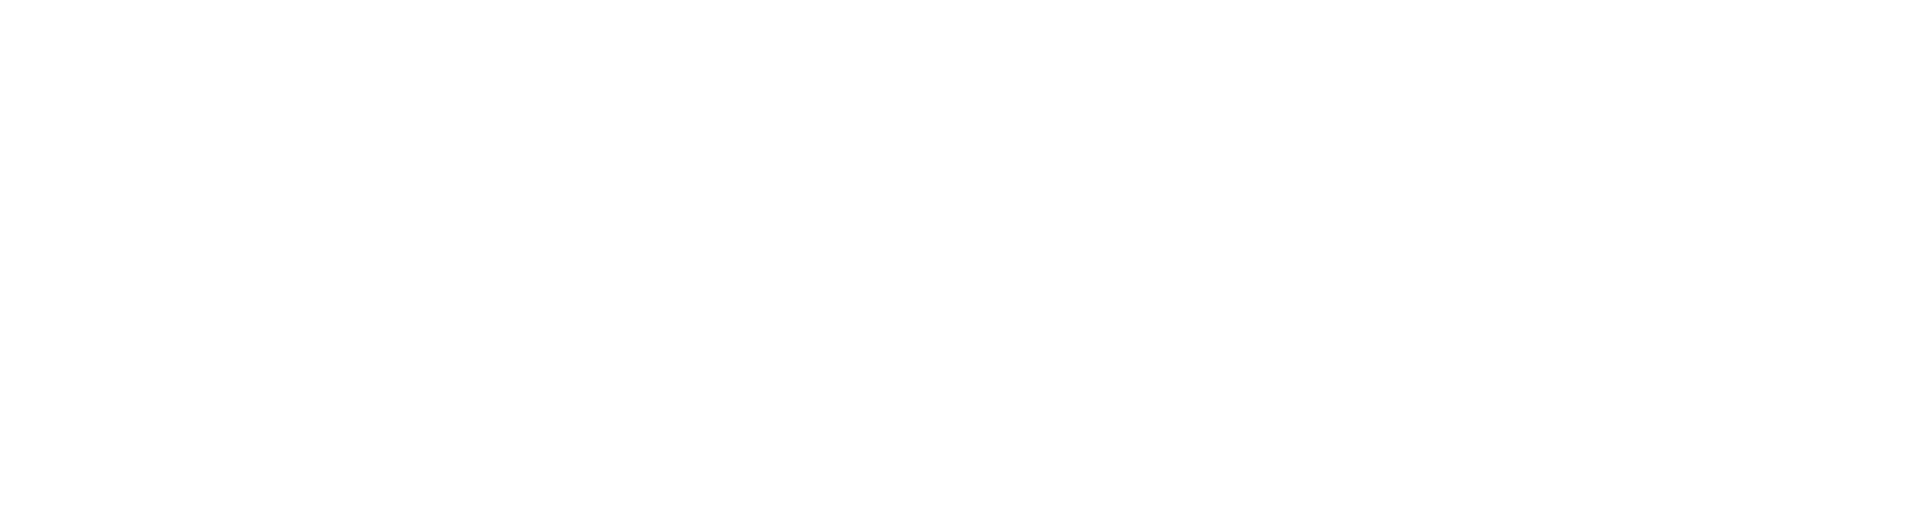 XPEL logo